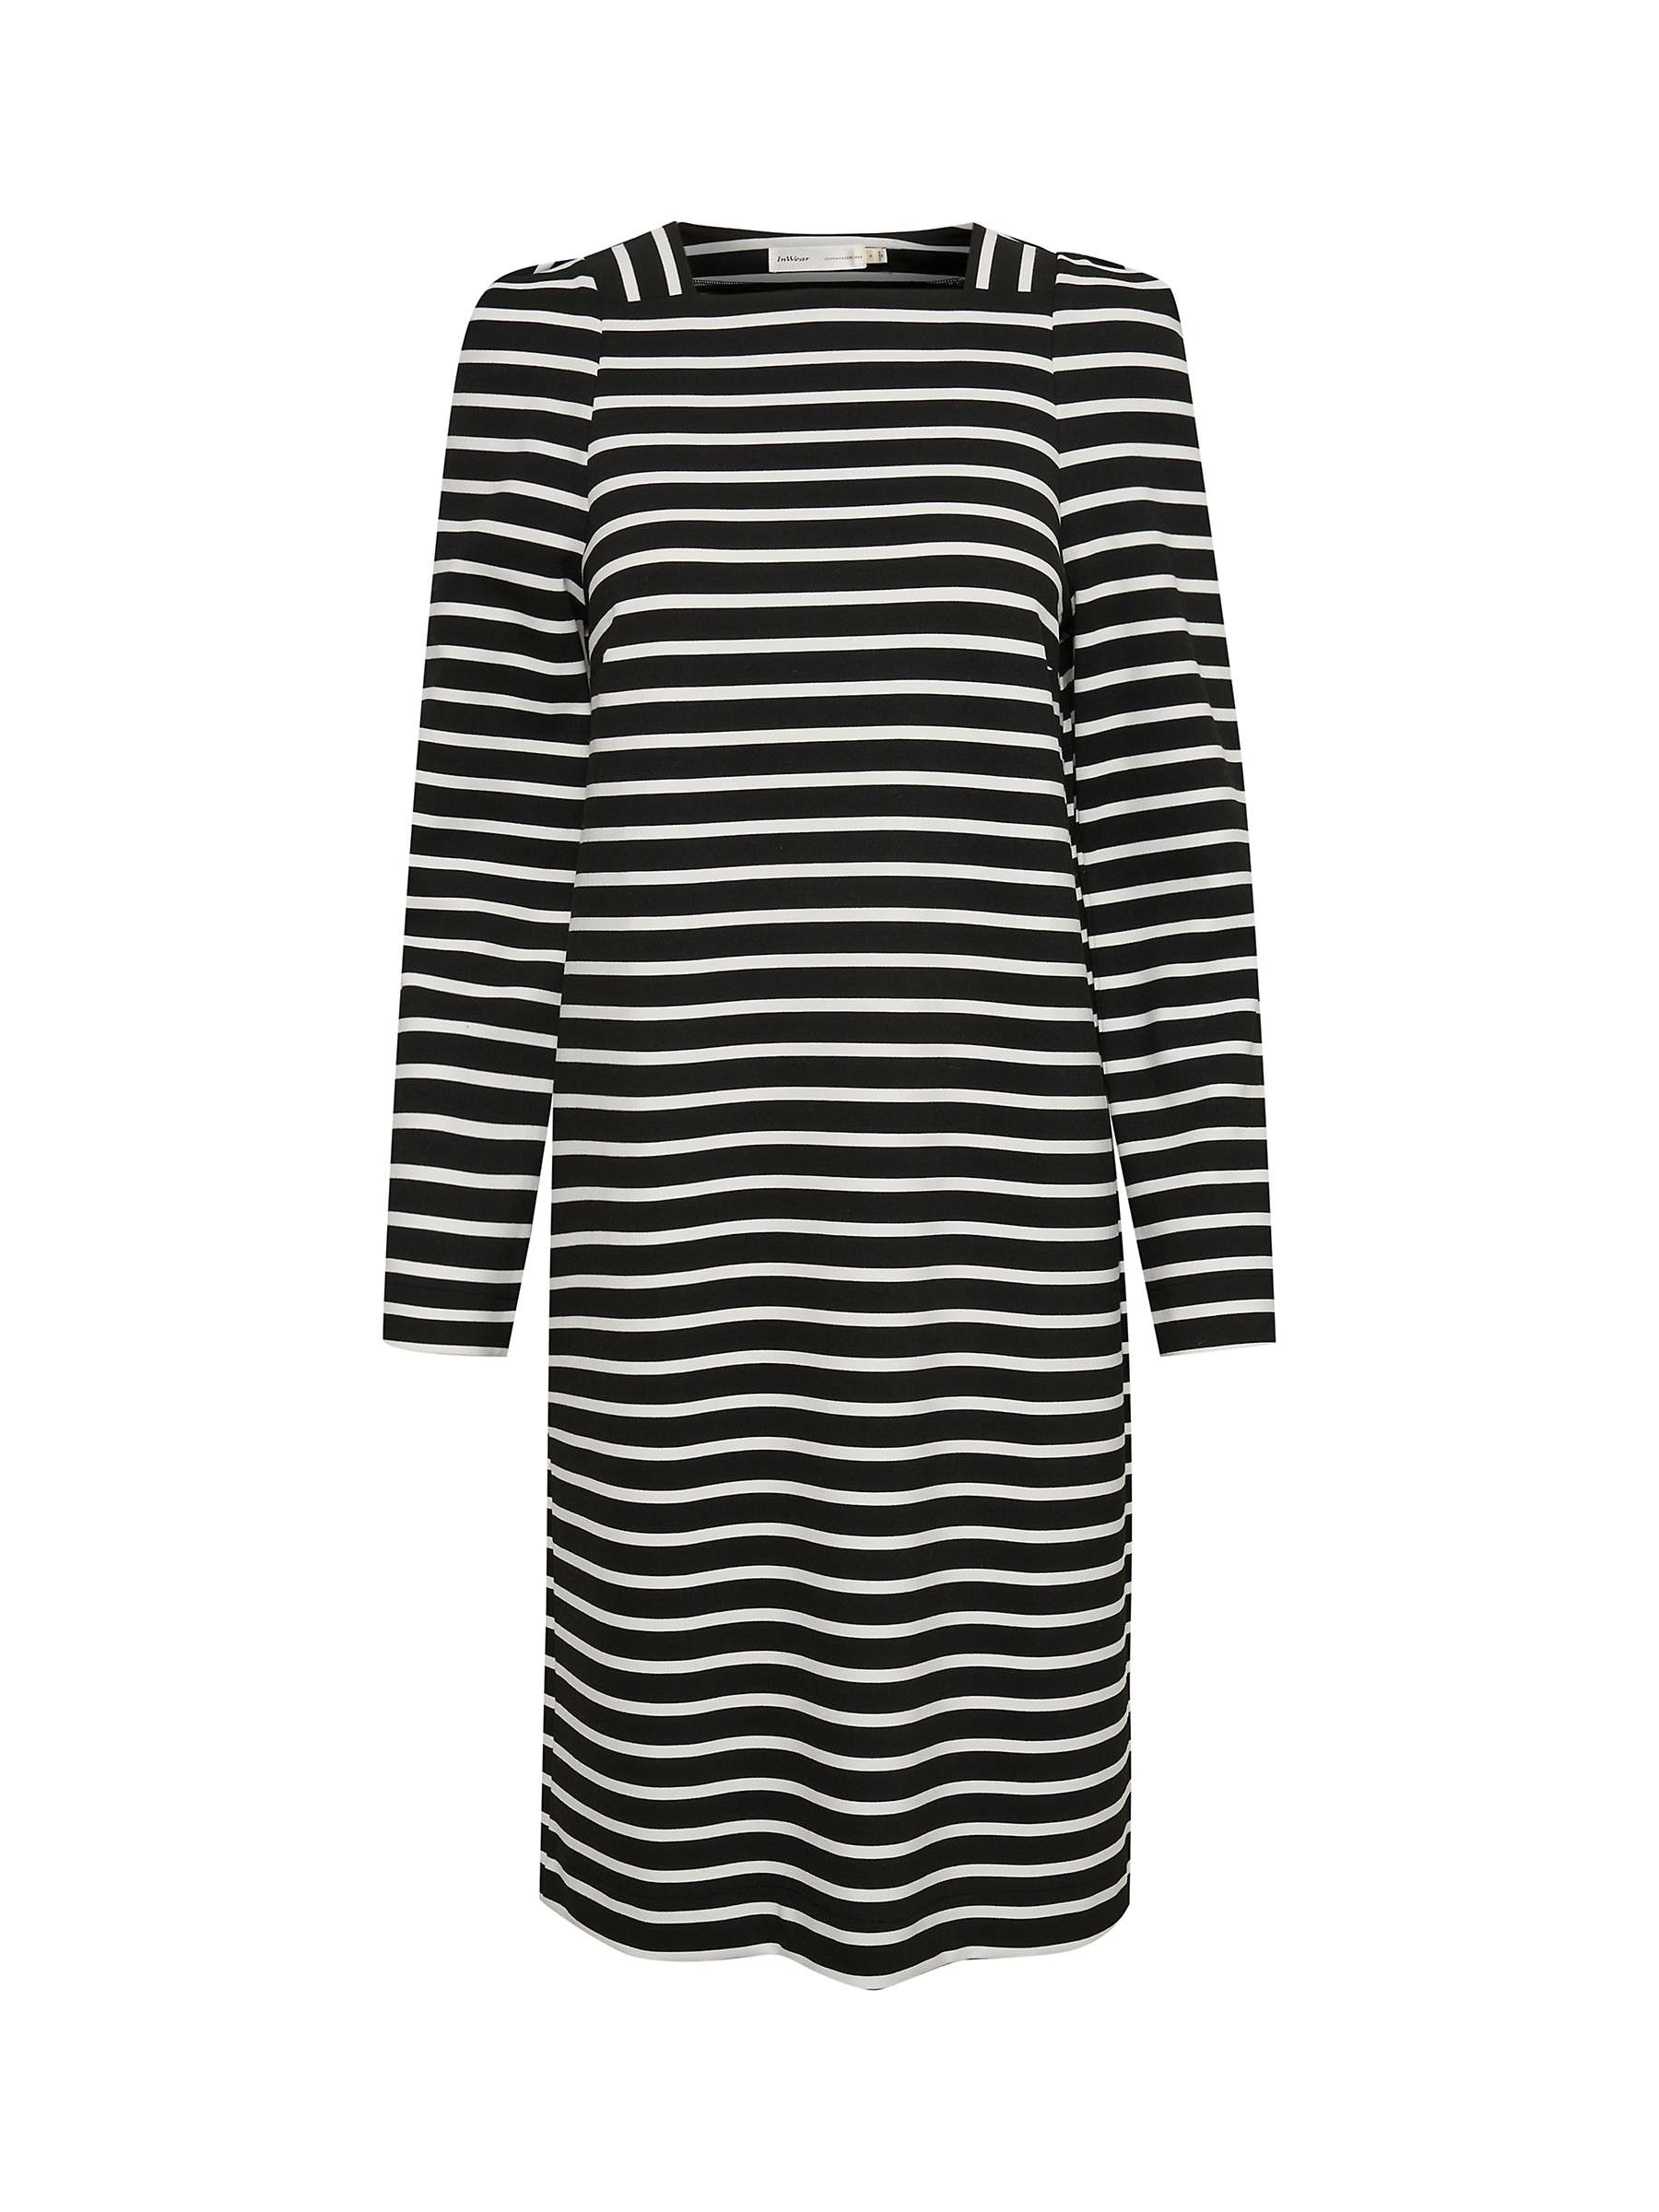 InWear Ruby Stripe Dress, Black/White at John Lewis & Partners